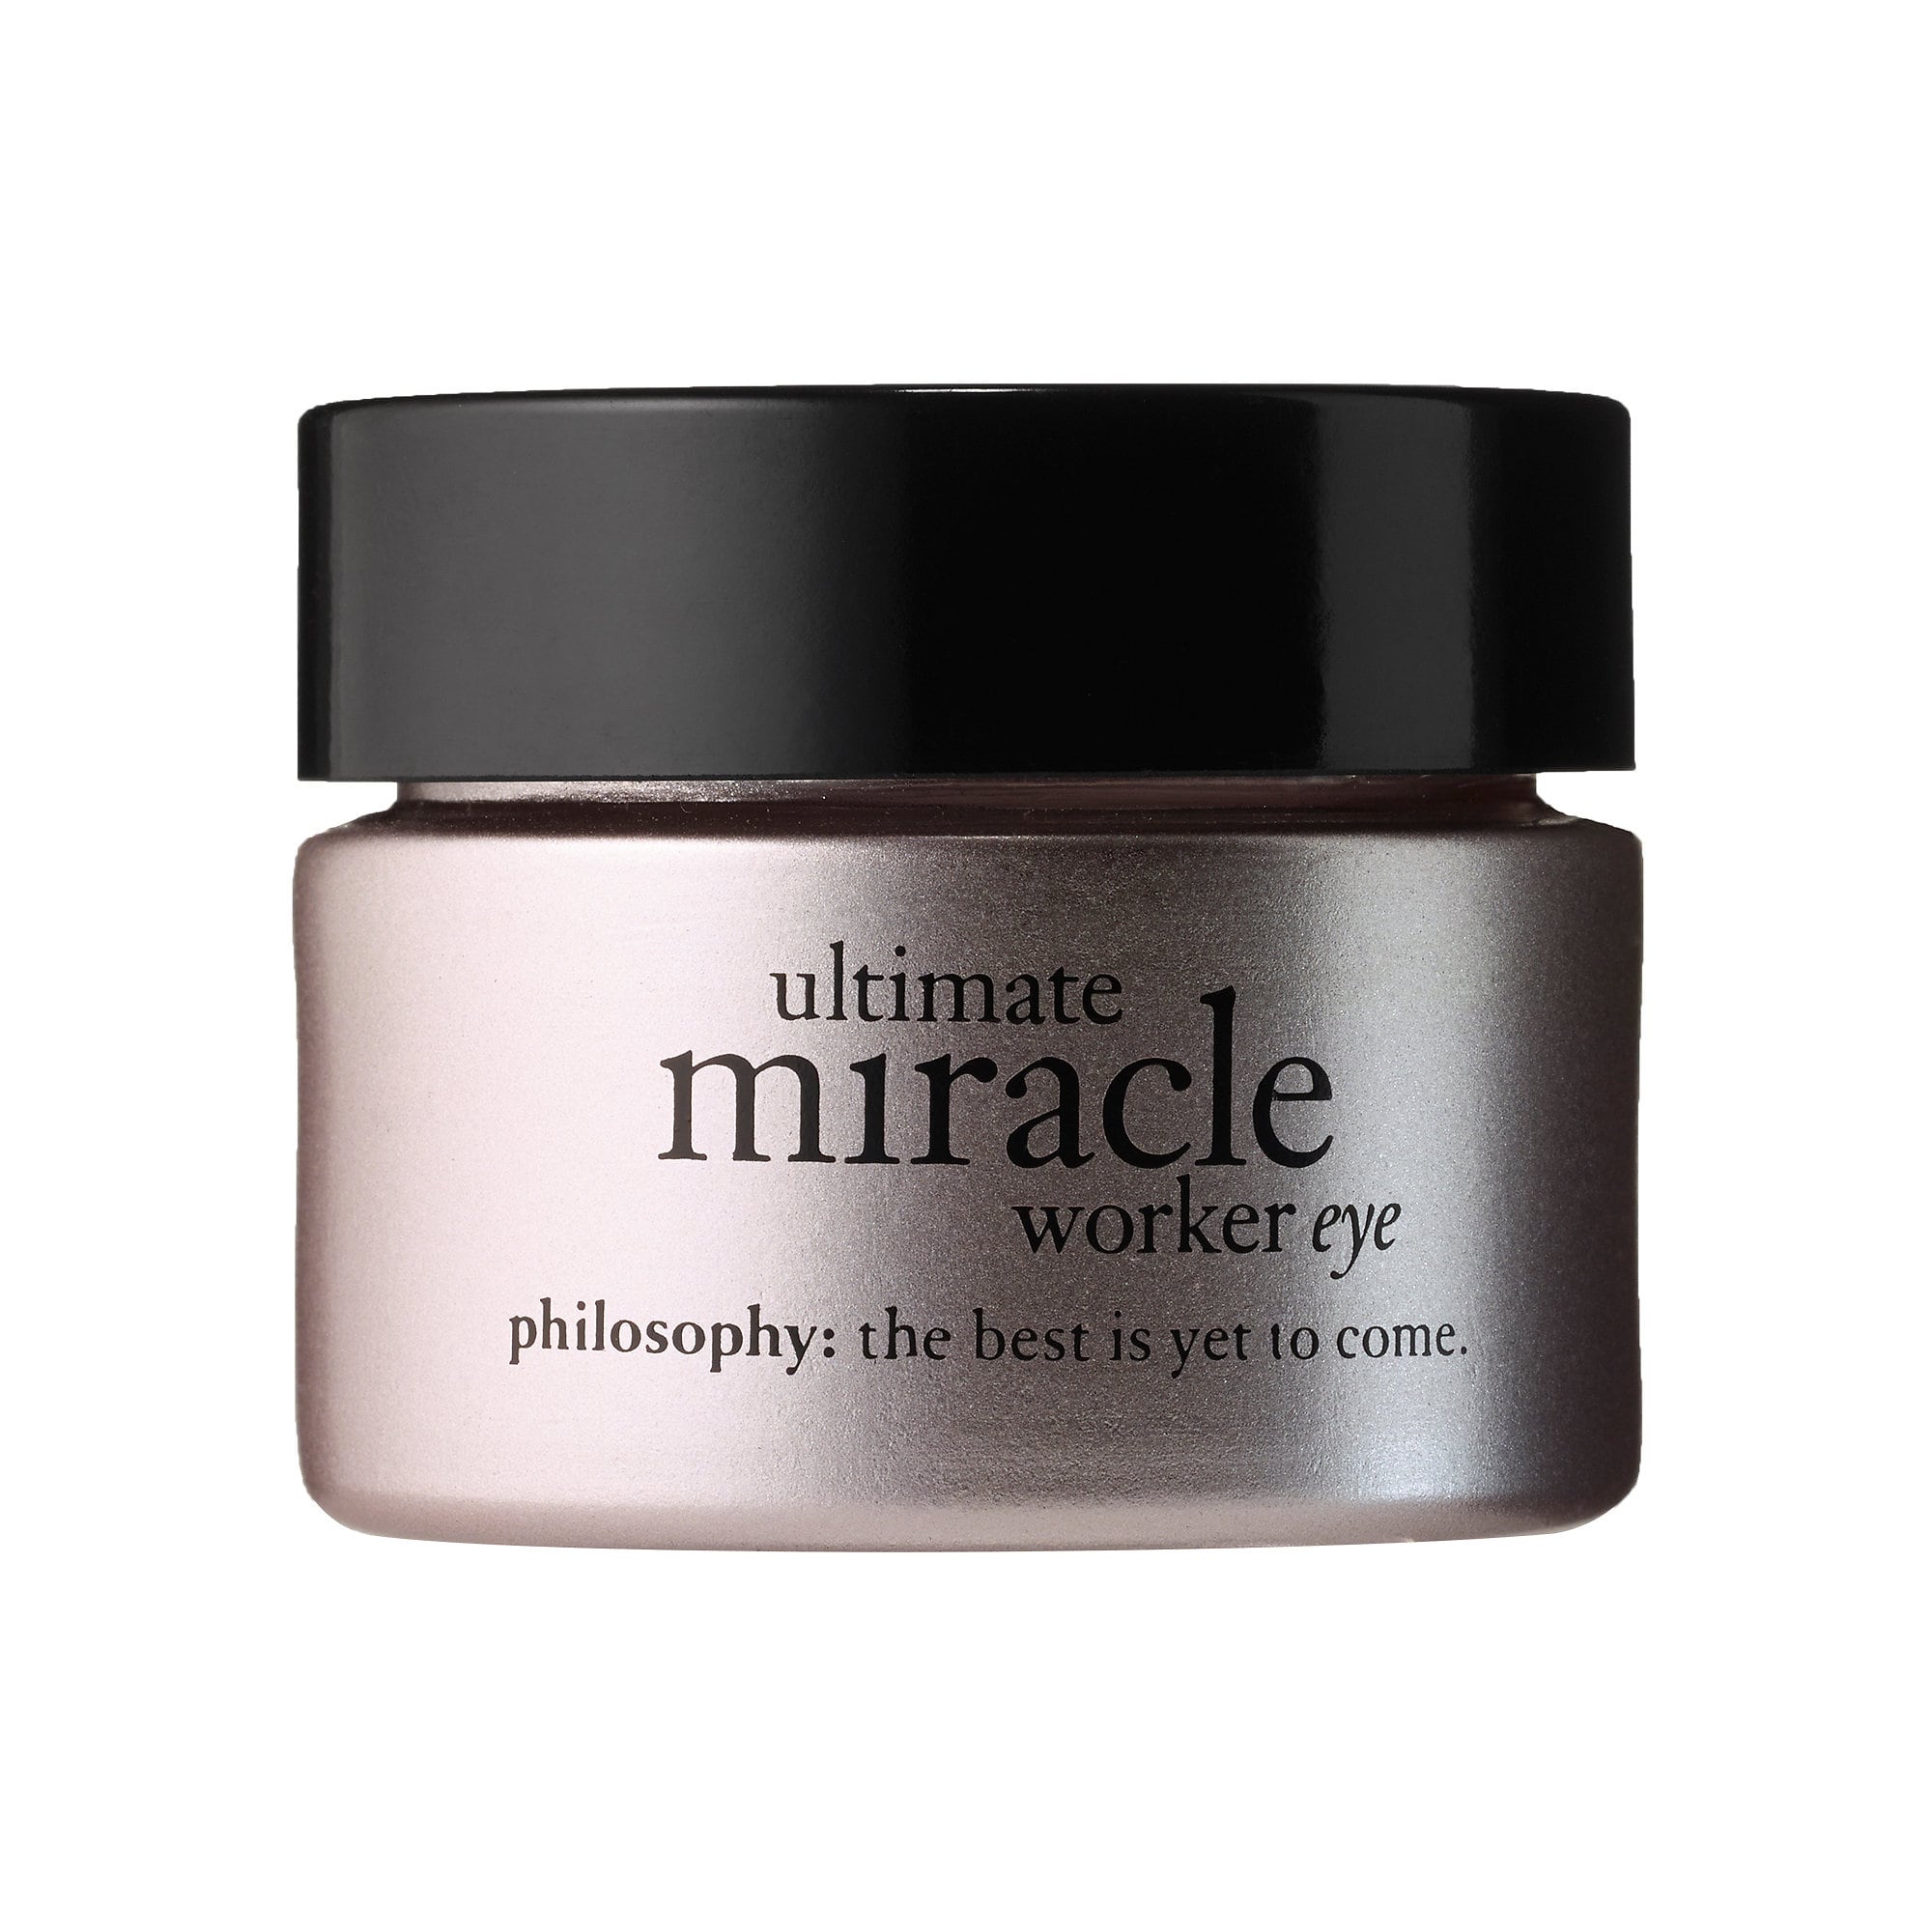 Philosophy крем. Ultimate Miracle. Best Eye Cream at Sephora.